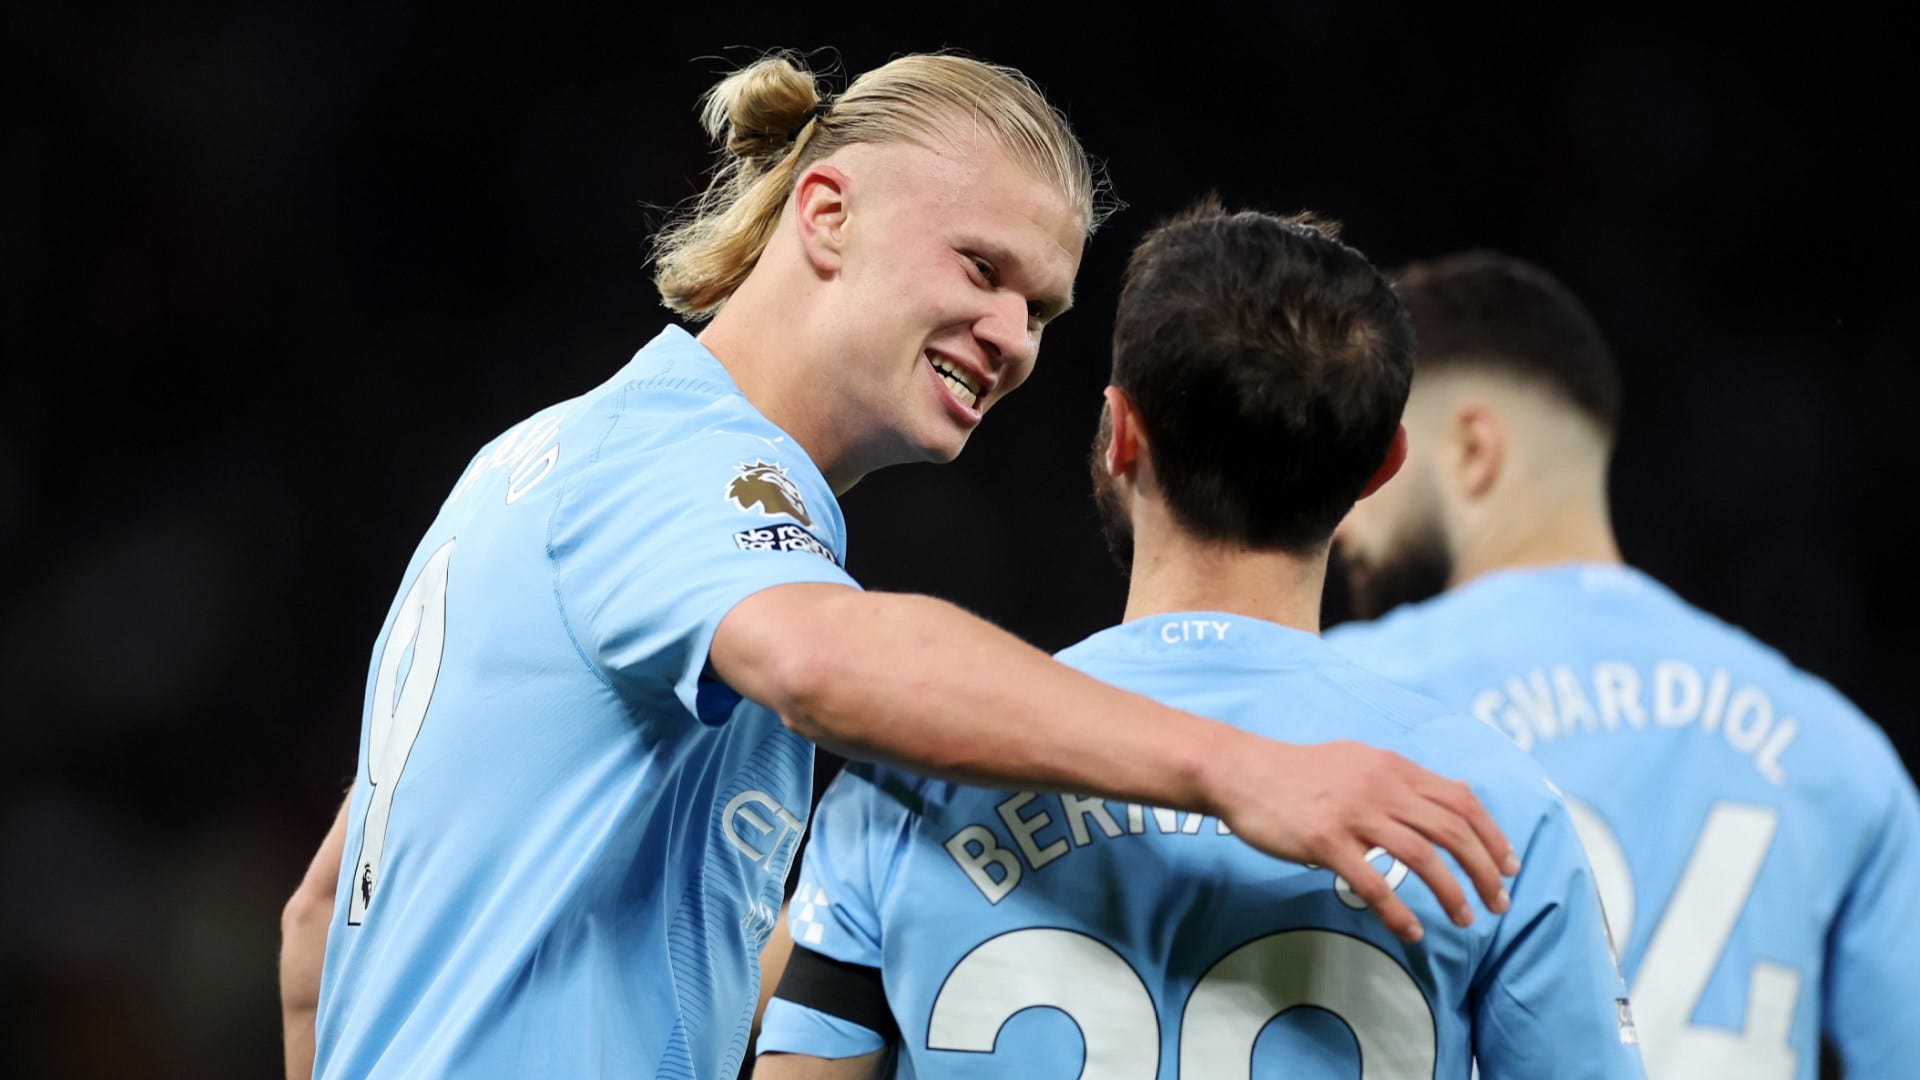 Manchester City player ratings: Haaland scores brace as City retain top  spot